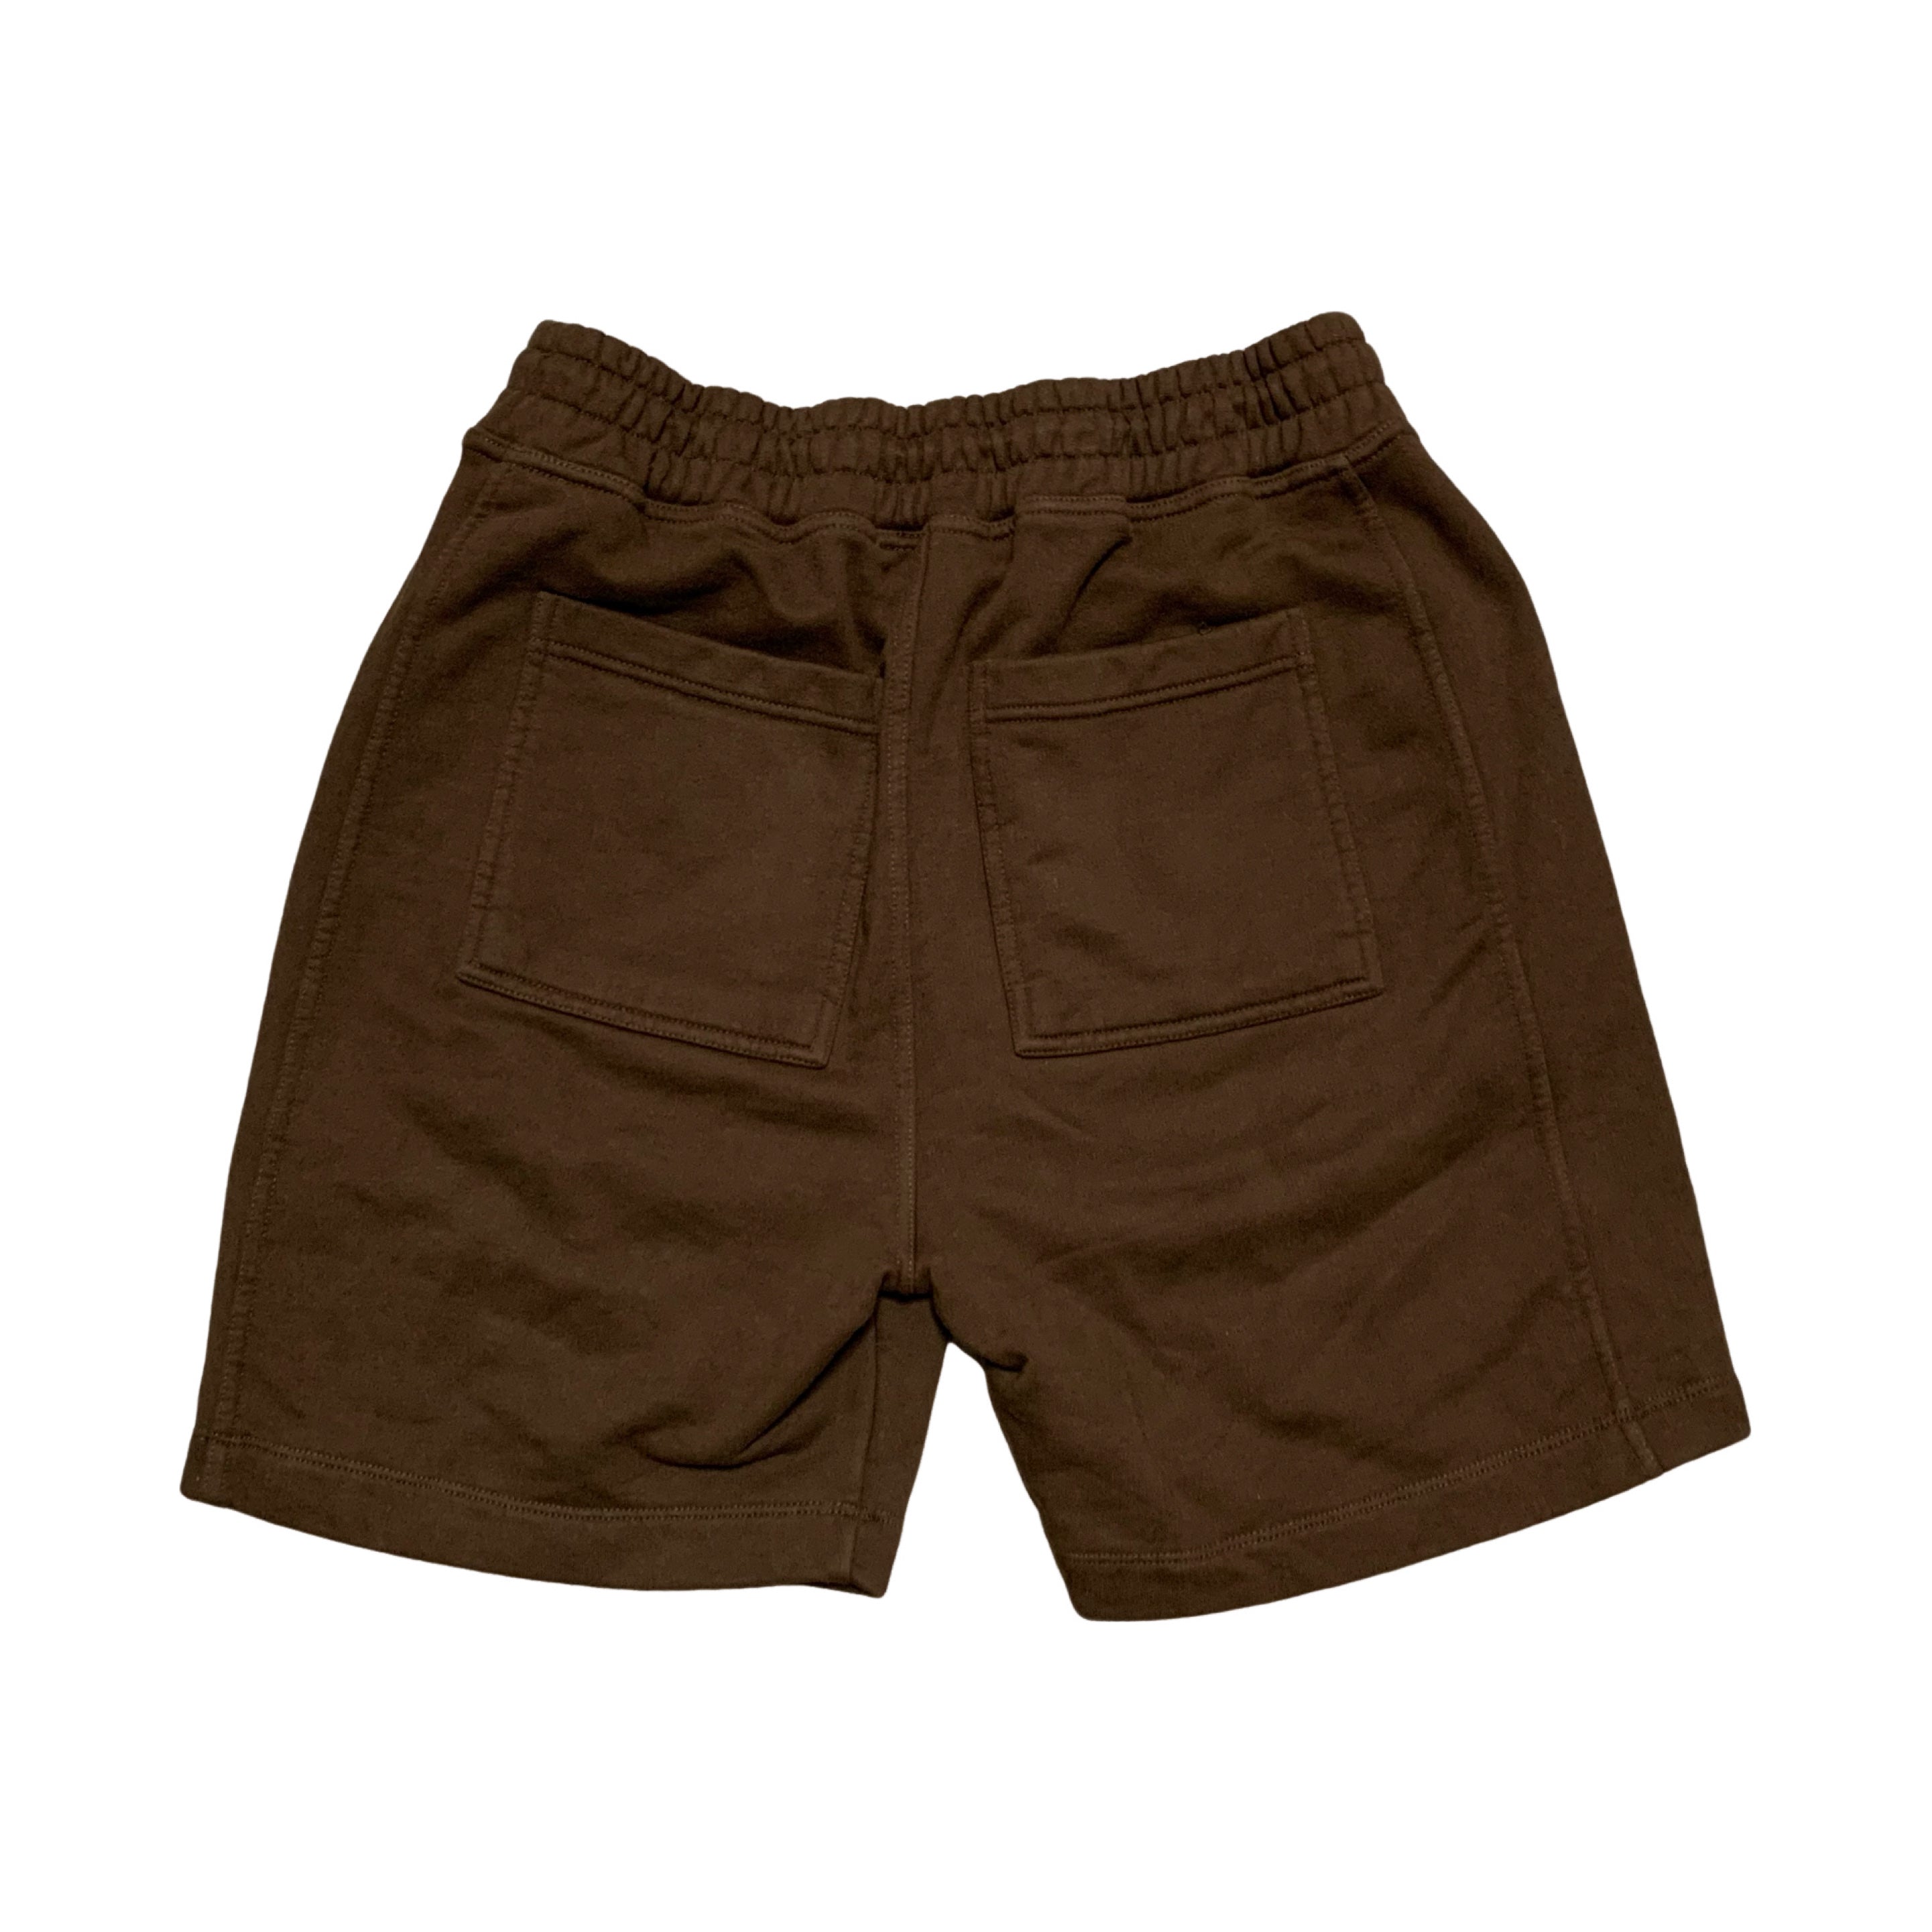 Represent Medium Blanks Vintage Brown Sweat Shorts Joggers